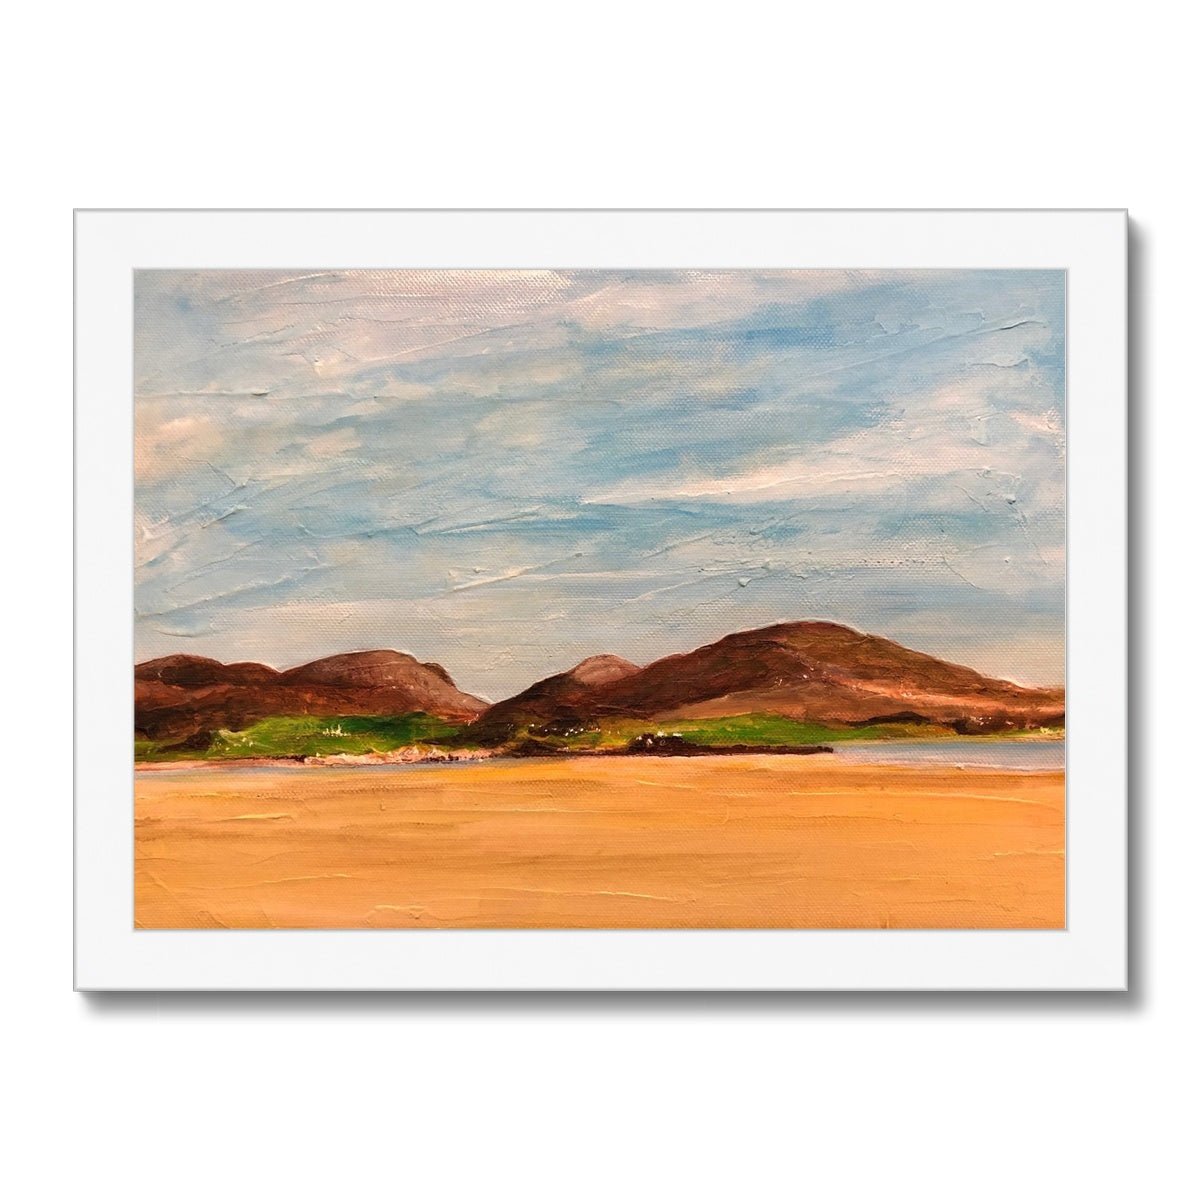 Uig Sands Lewis Painting | Framed Prints From Scotland-Framed Prints-Hebridean Islands Art Gallery-A4 Landscape-White Frame-Paintings, Prints, Homeware, Art Gifts From Scotland By Scottish Artist Kevin Hunter